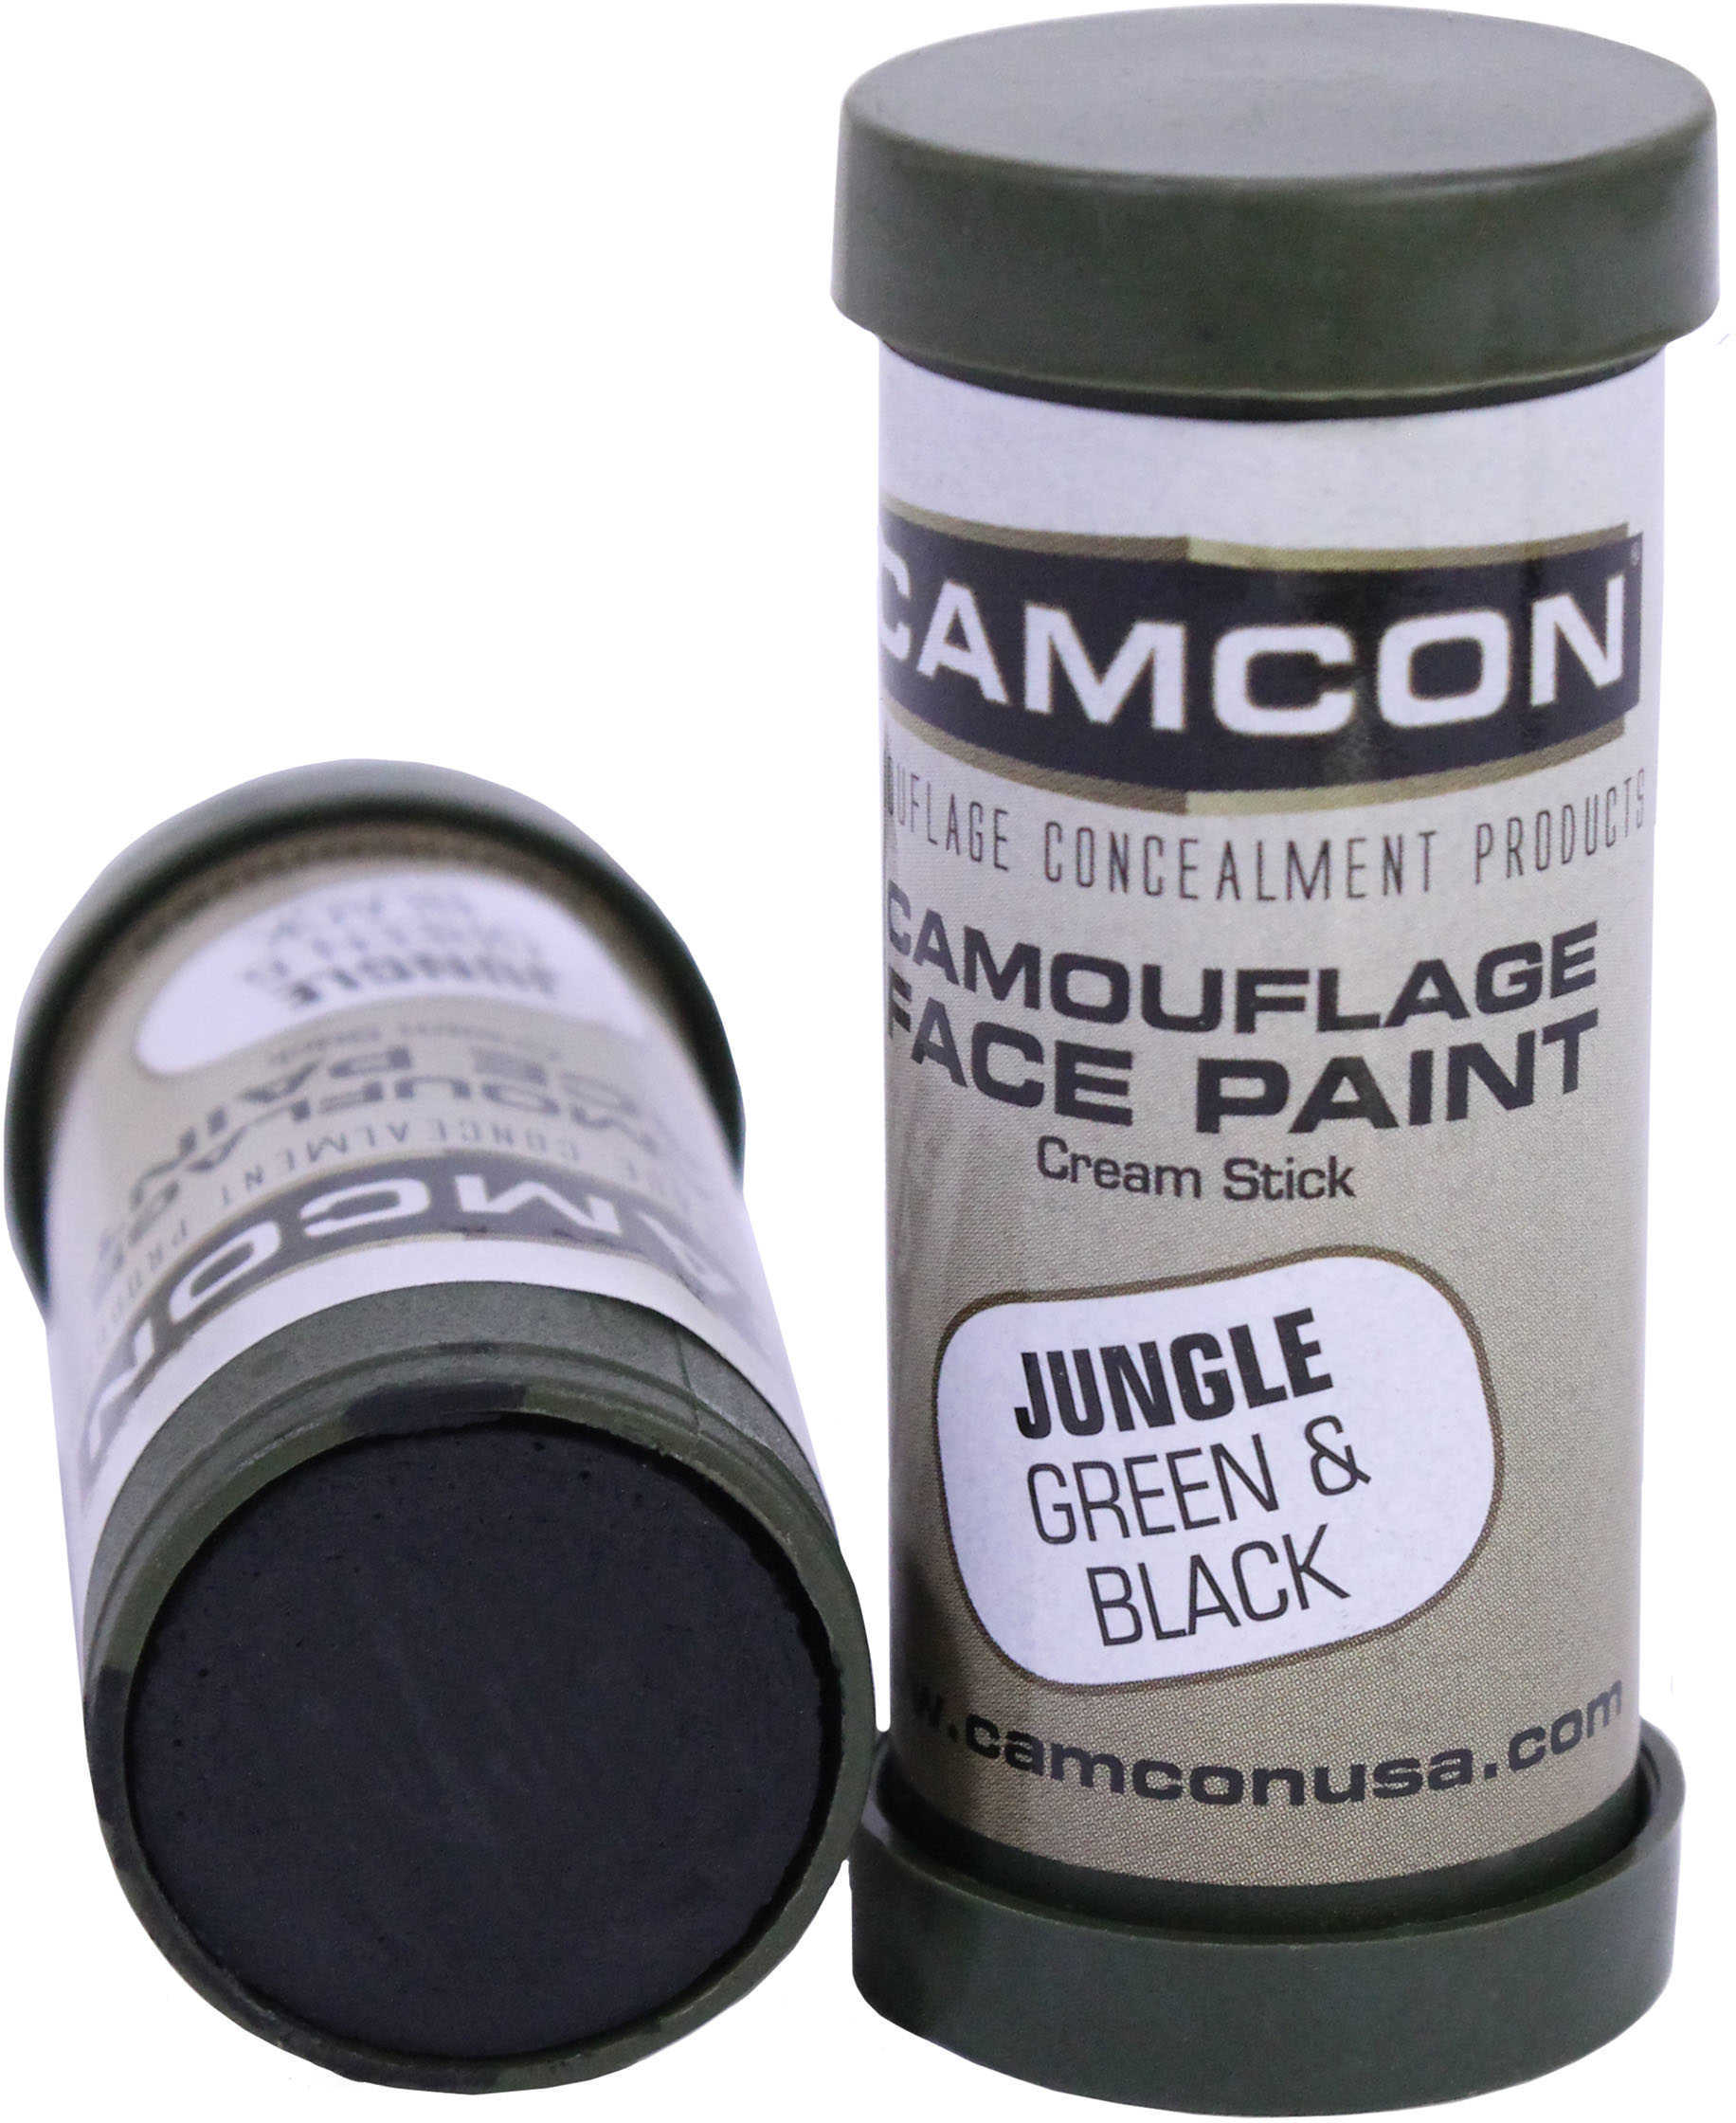 Camcon Face Paint Jungle Grn/Blk 2Pk